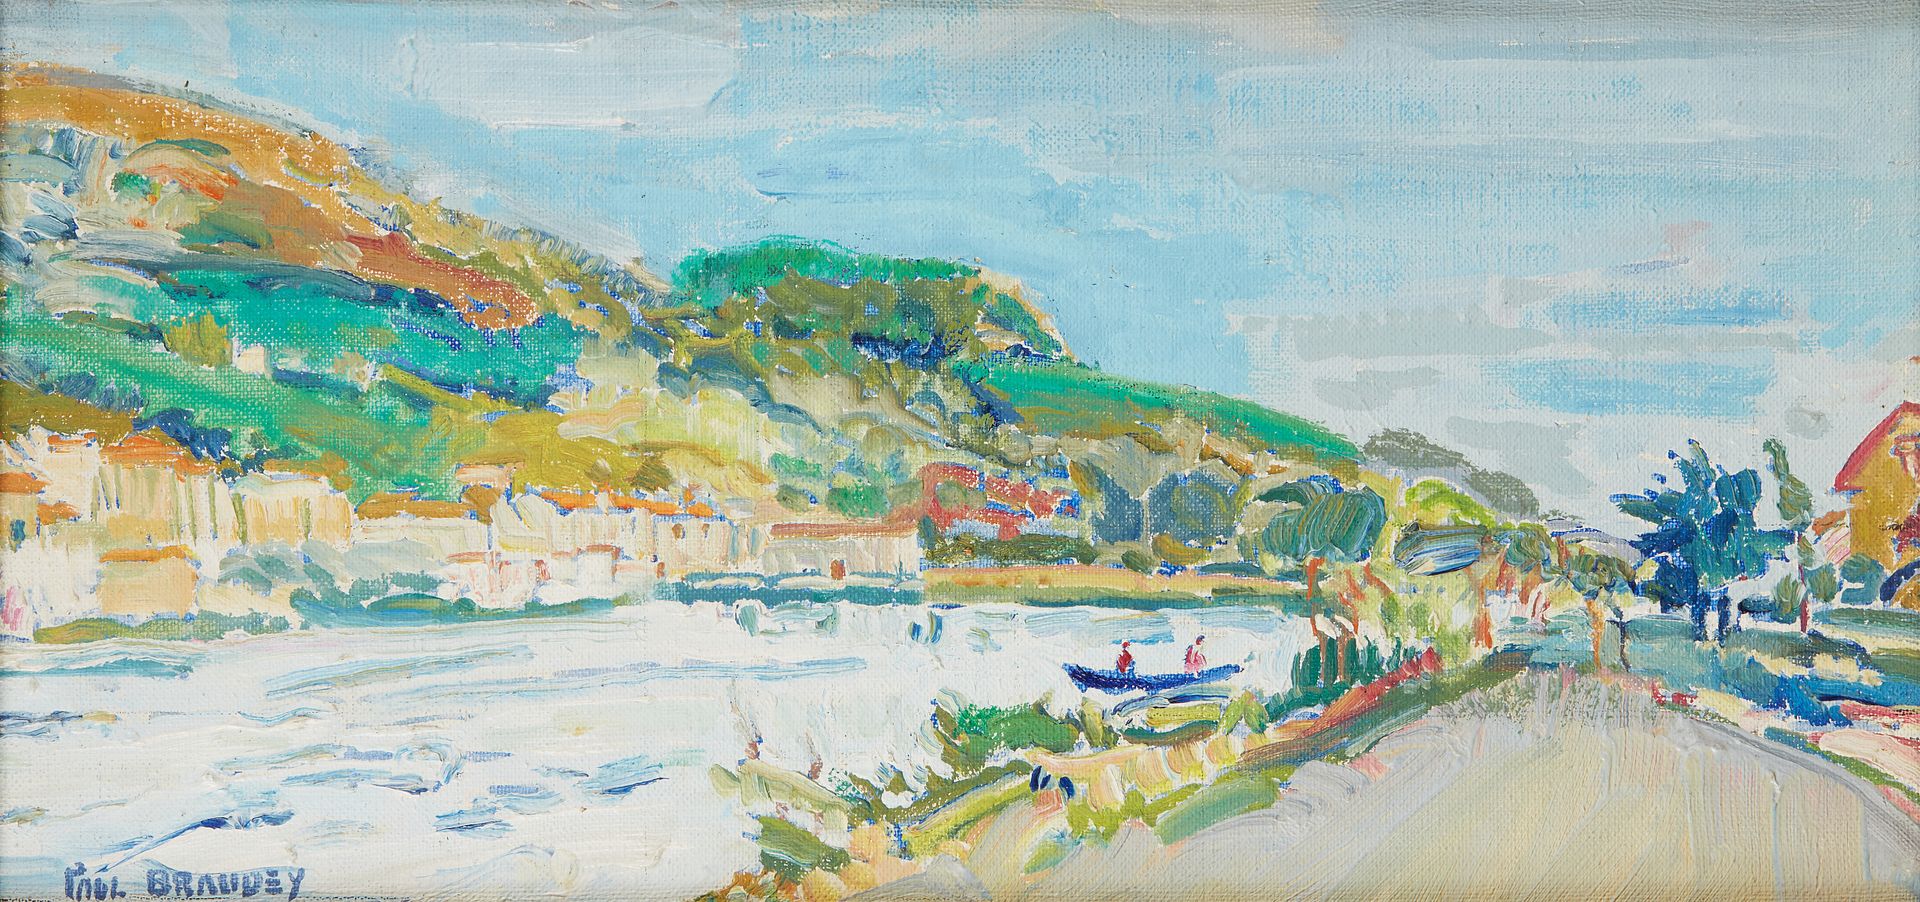 Null Paul BRAUDEY (生于1930年)


伊泽尔河，1962年


布面油画，左下角有签名


20 x 40厘米